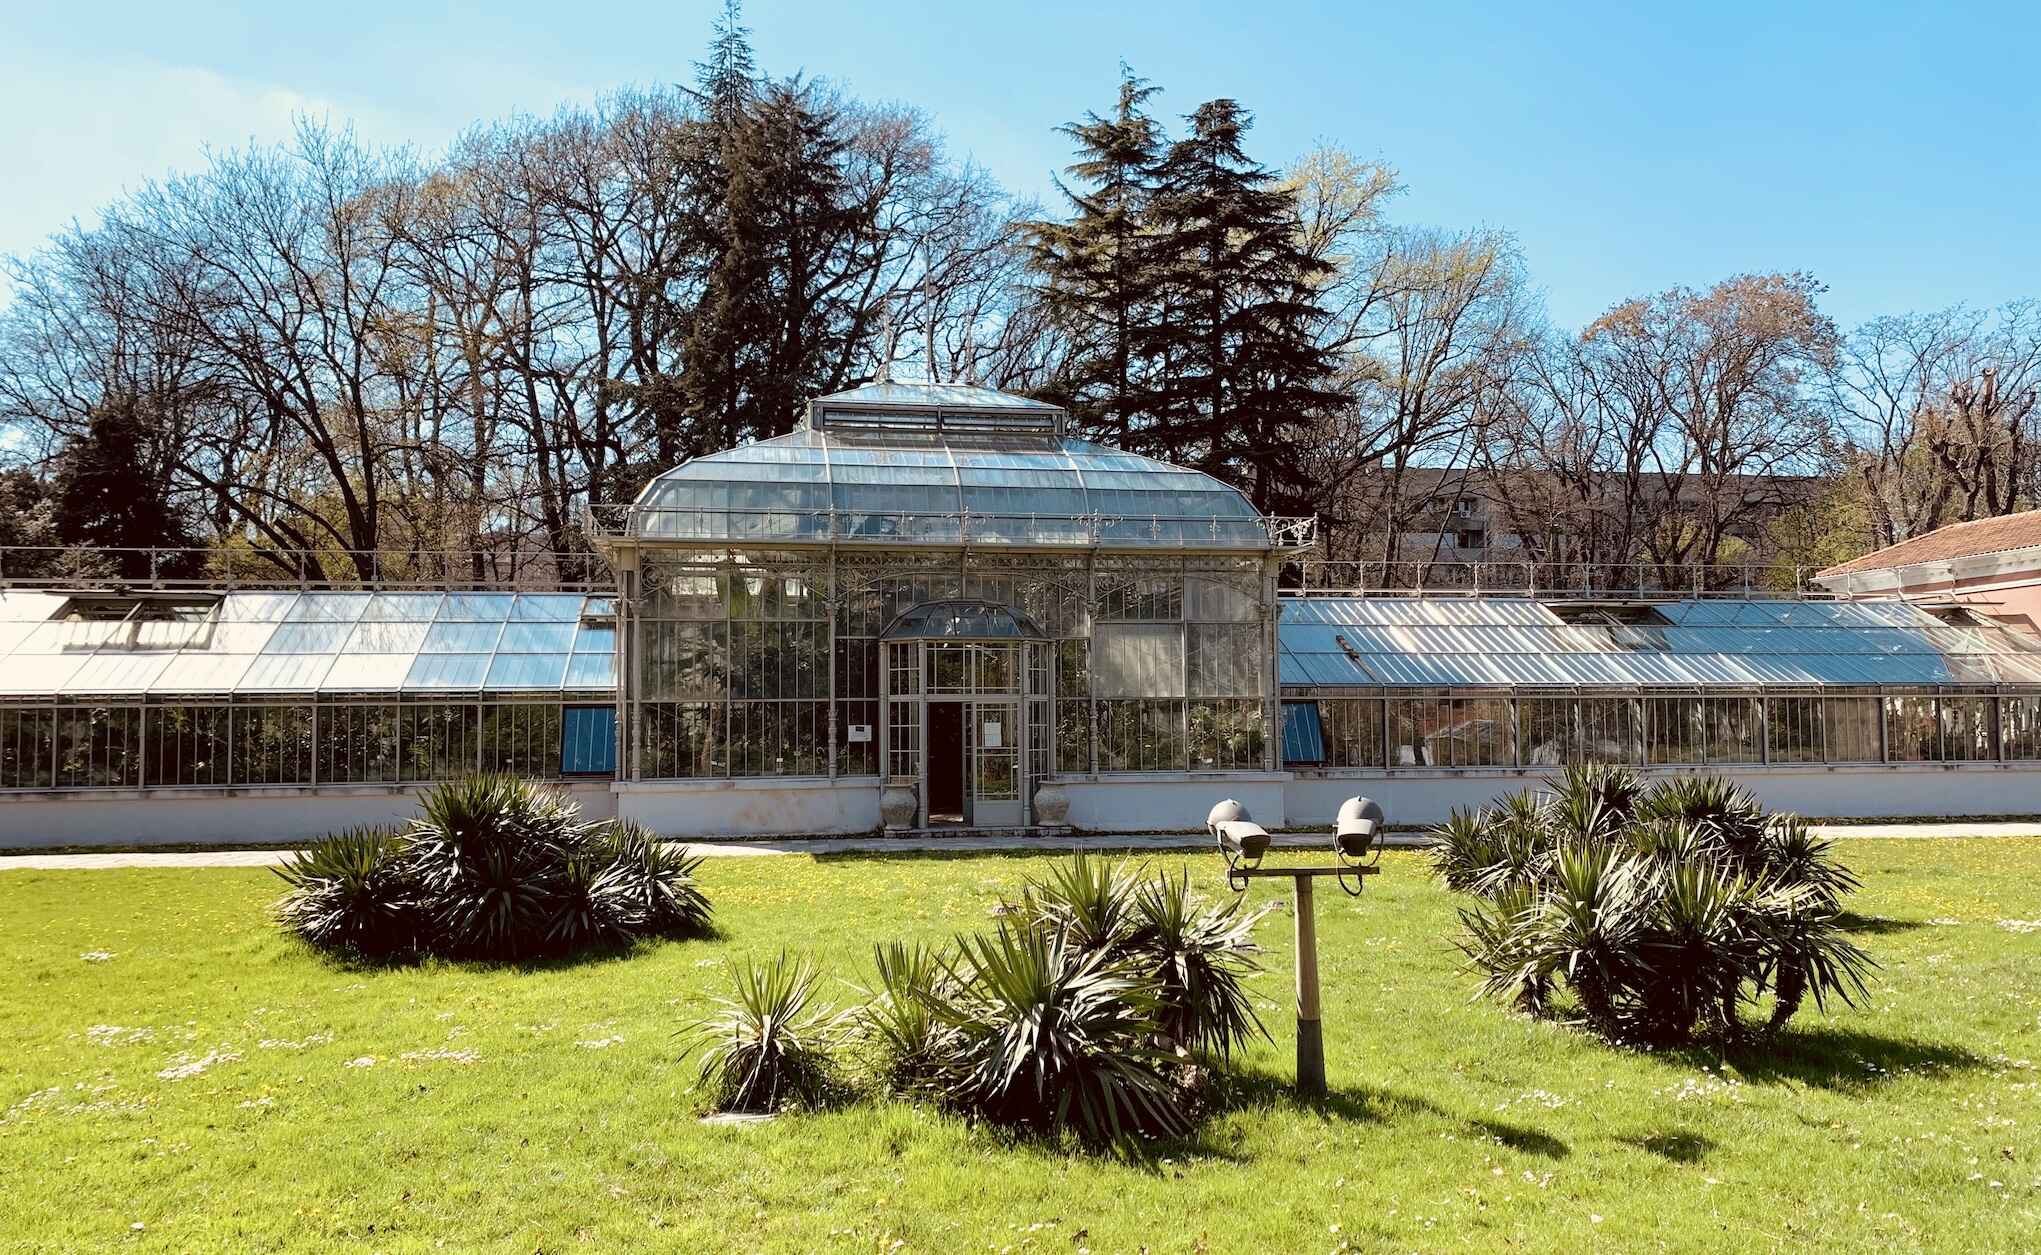 The 1892 greenhouse at Jevremovac Botanical Garden, Belgrade